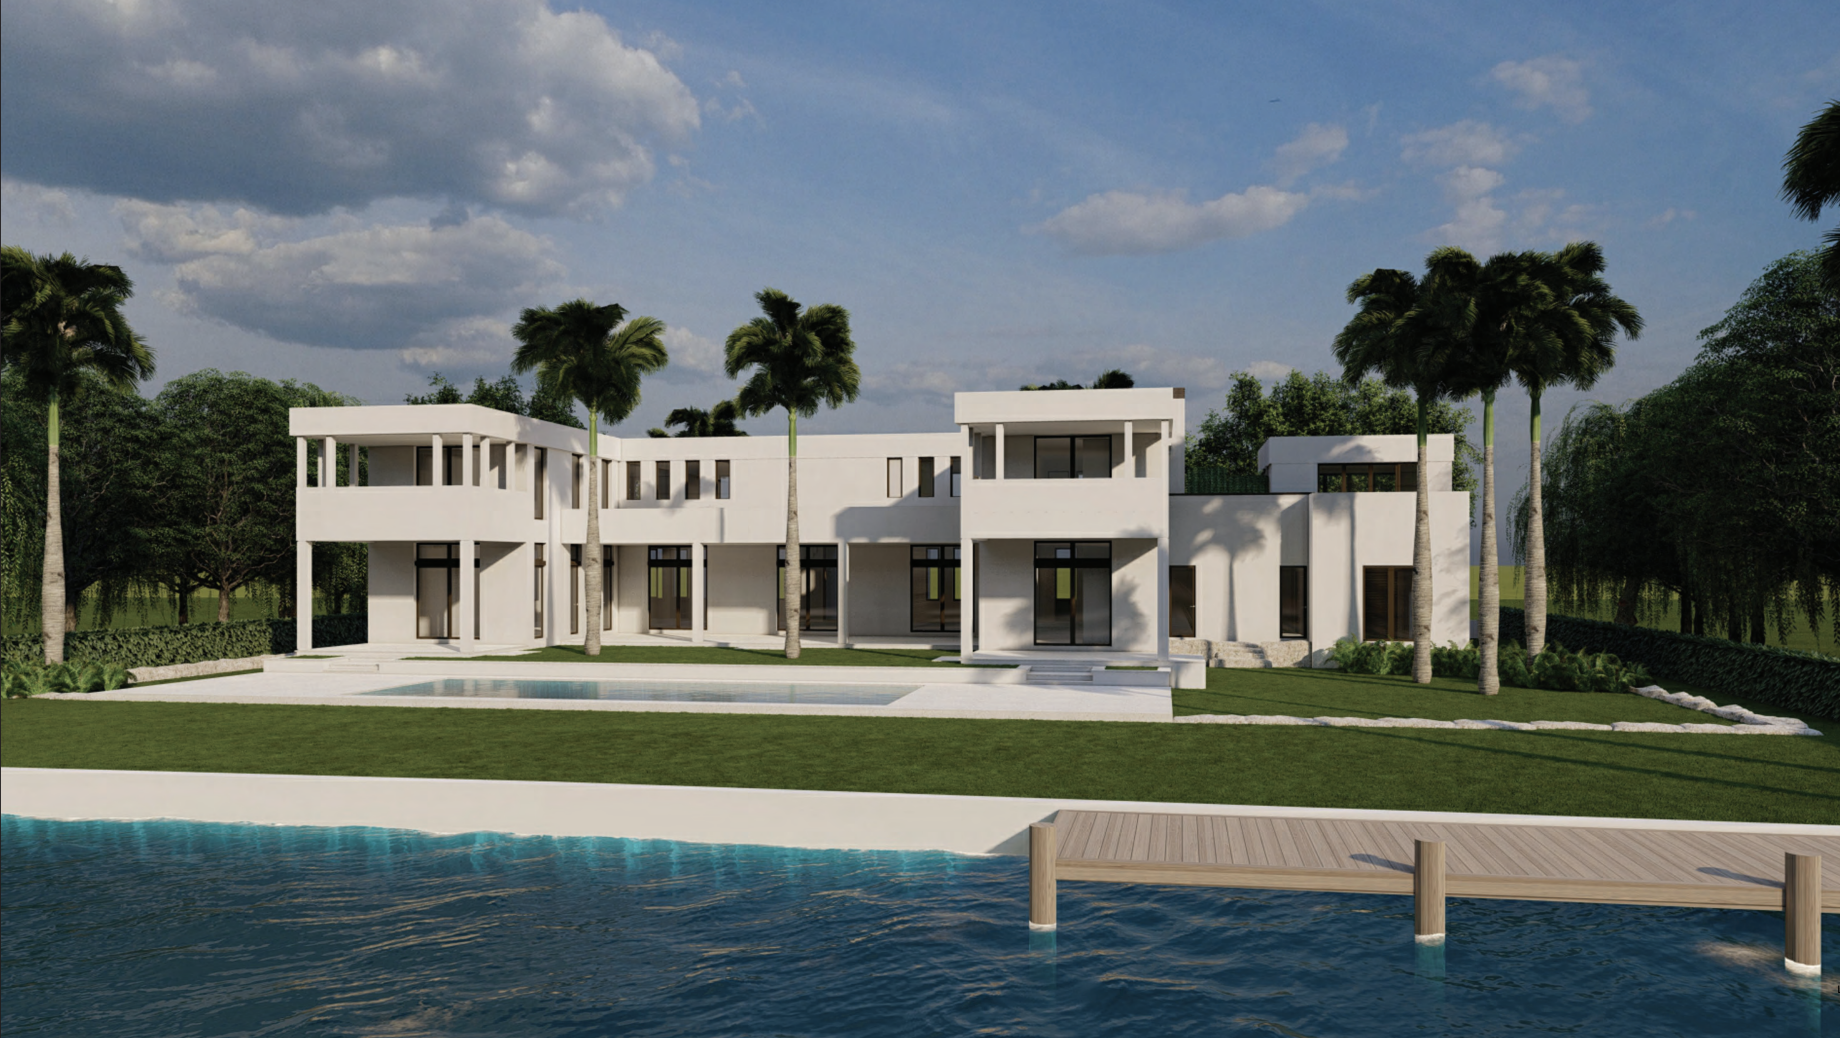 Estate planning? Jamie LeFrak secures lot split to build waterfront homes for his kids